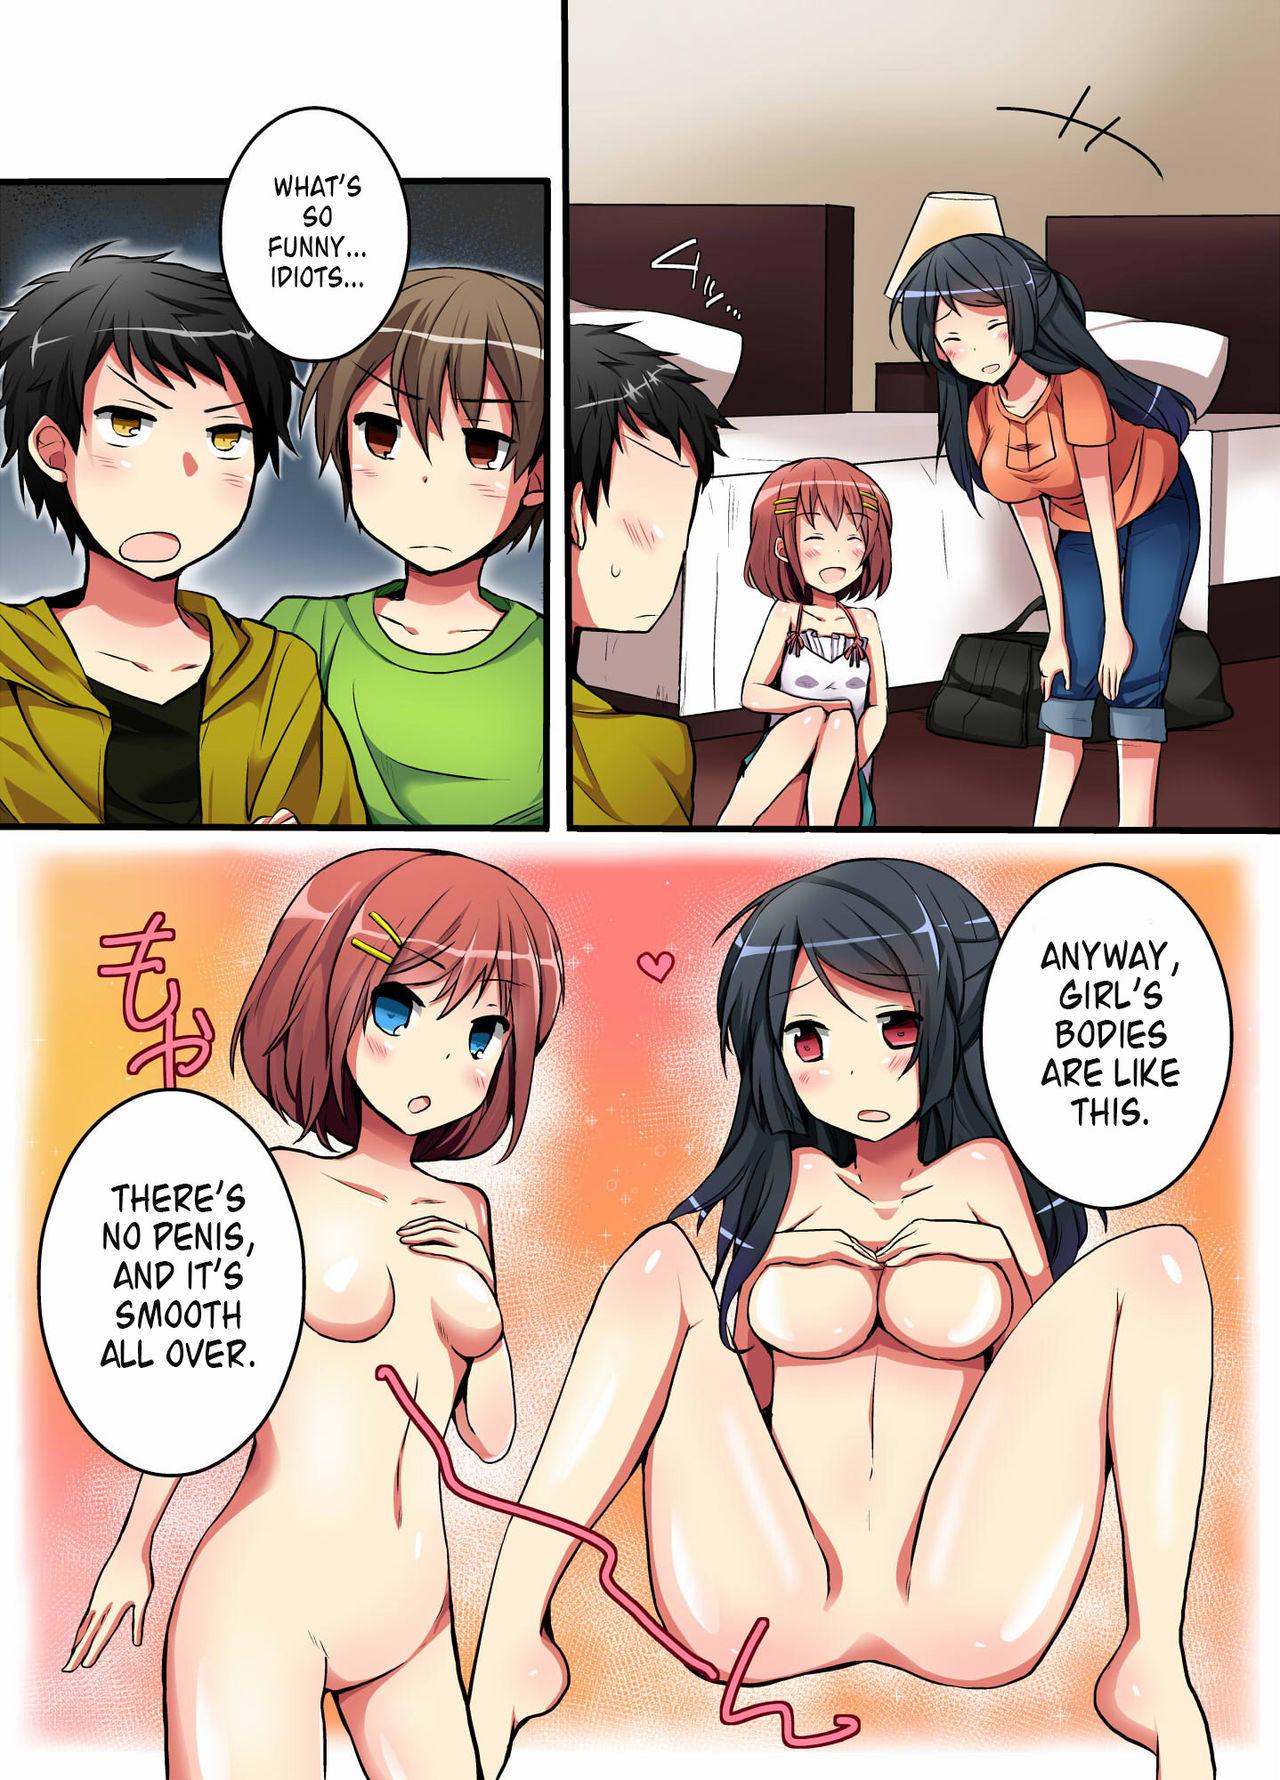 [Shinenkan] Joutaihenka Manga vol. 2 ~Onnanoko no Asoko wa dou natterun no? Hen~ | Transformation Comics vol. 2 ~What's the Deal with Girl's Privates?~ [English] 8